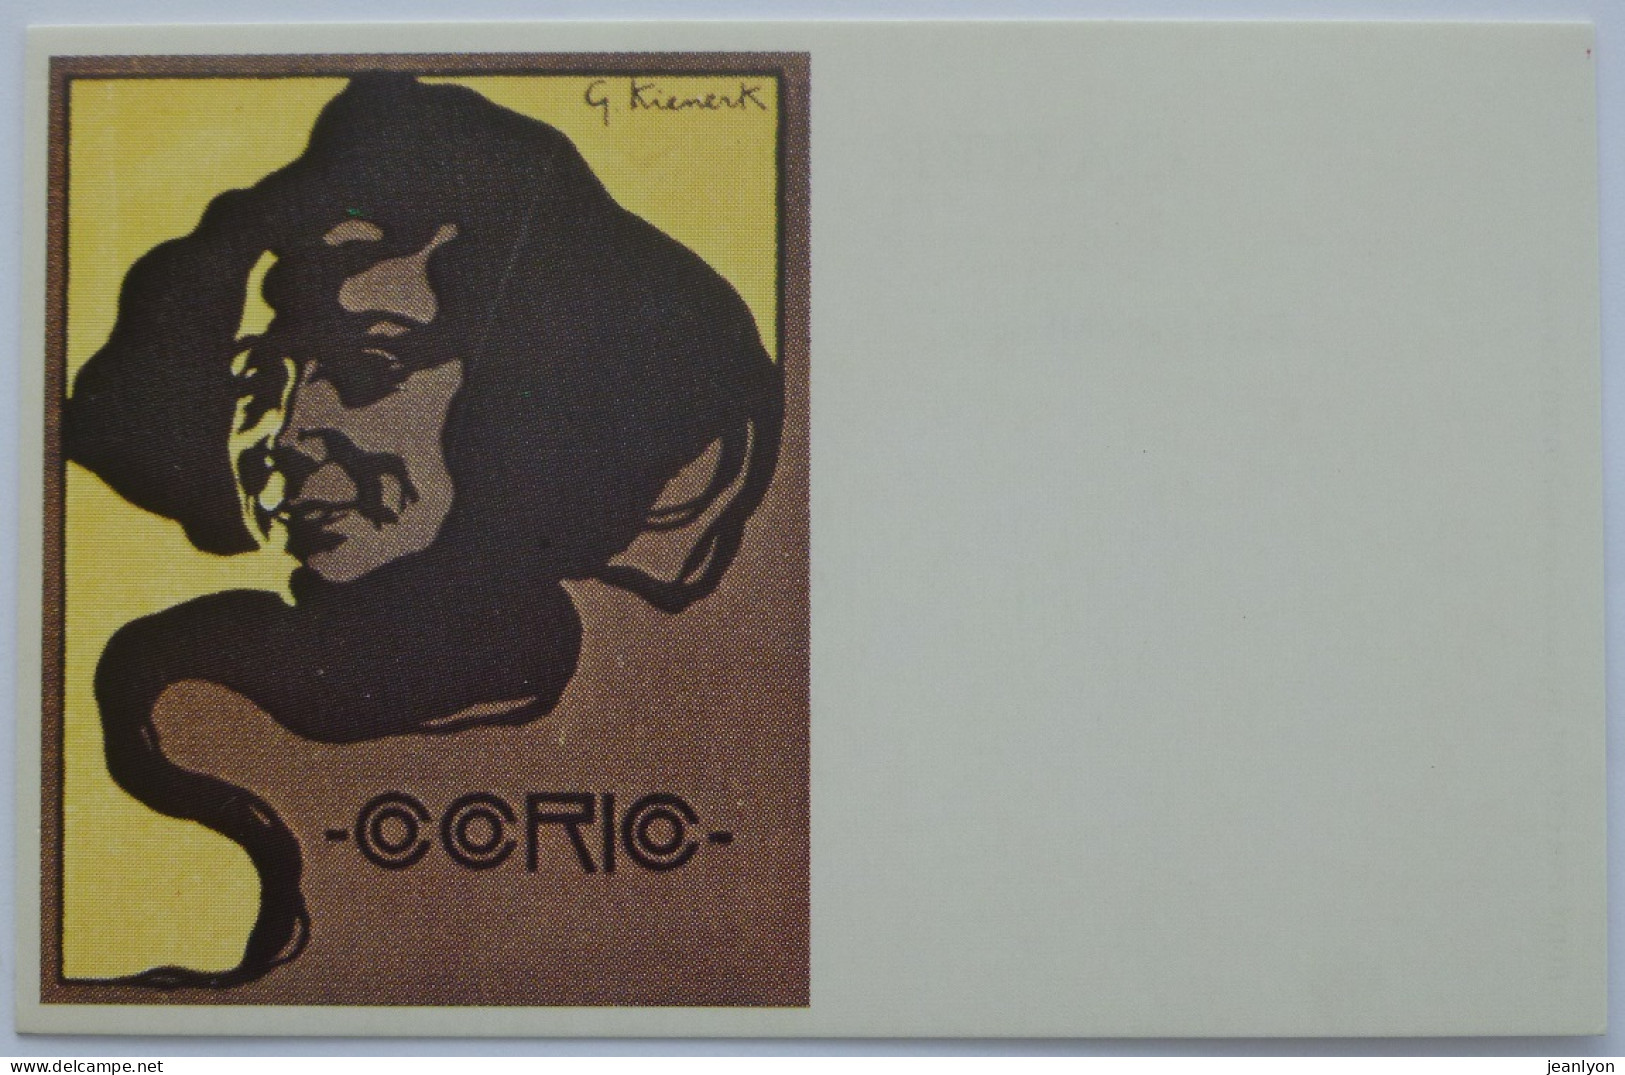 COCORICO - Visage De Femme - Illustrateur Kienerk - Carte Postale Moderne Reproduction Illustration Ancienne - Kienerk